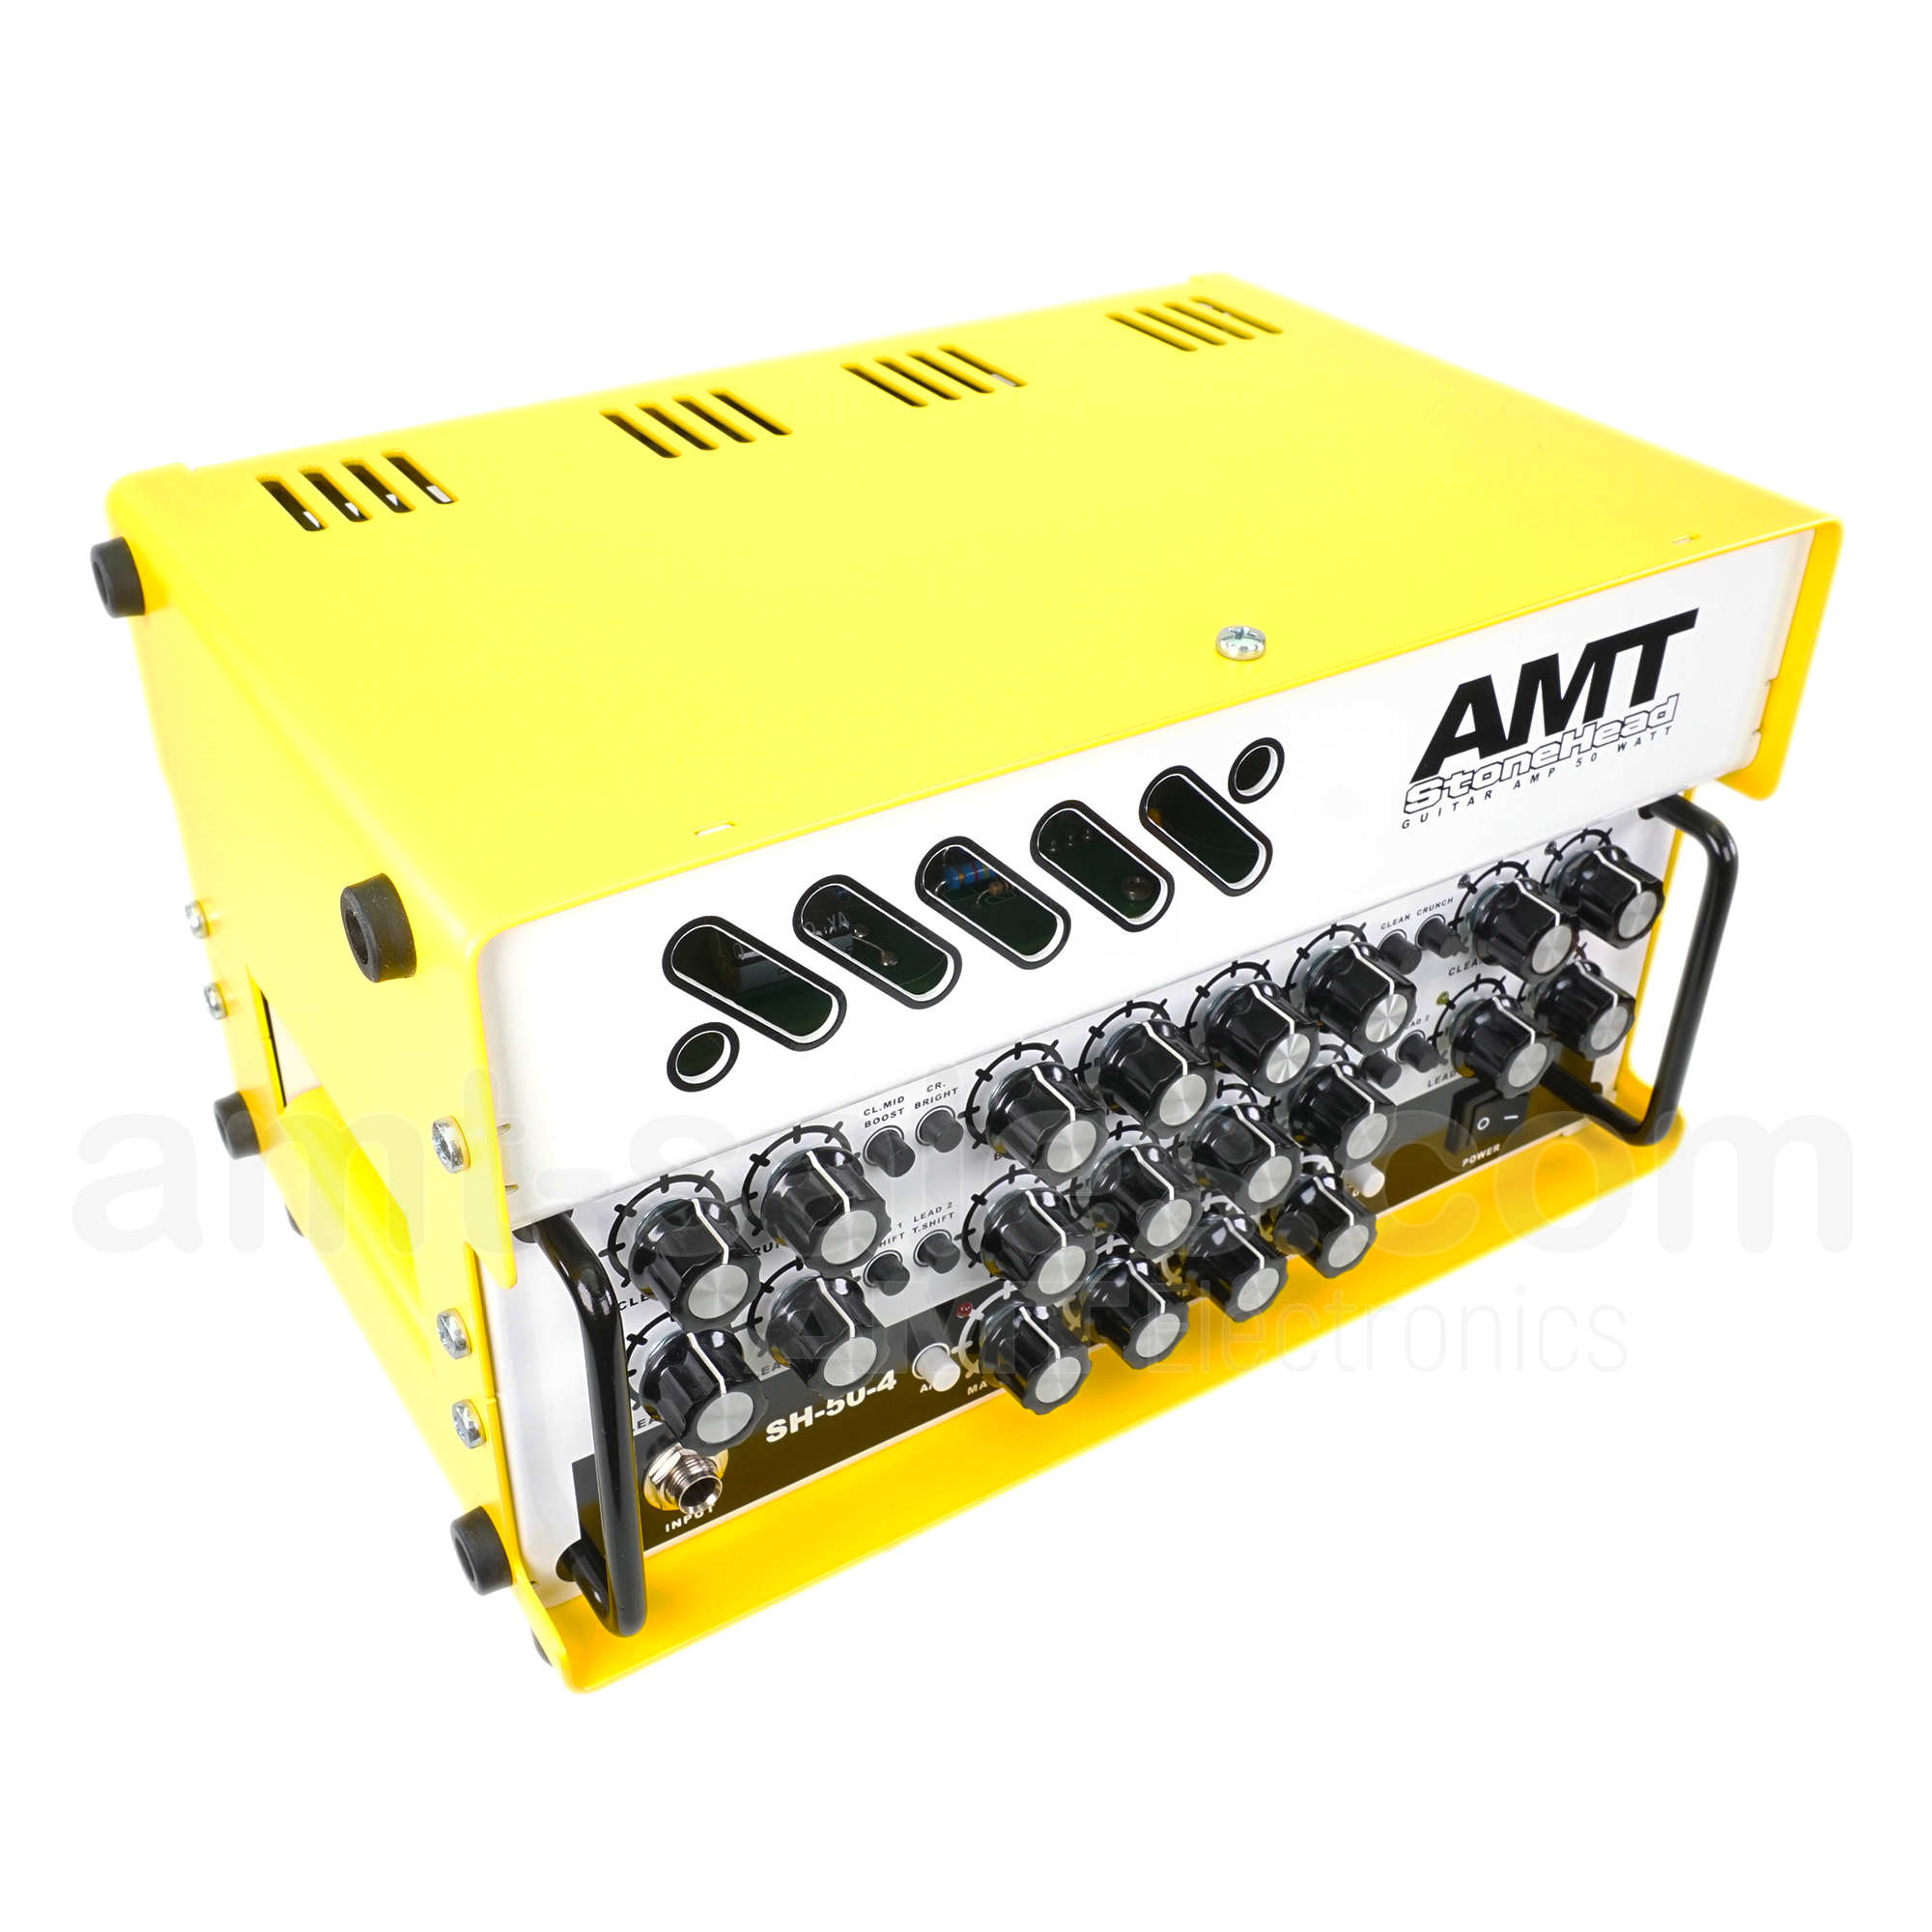 AMT Stonehead-50-4 - Guitar Head Amplifier (+ including special Bag)